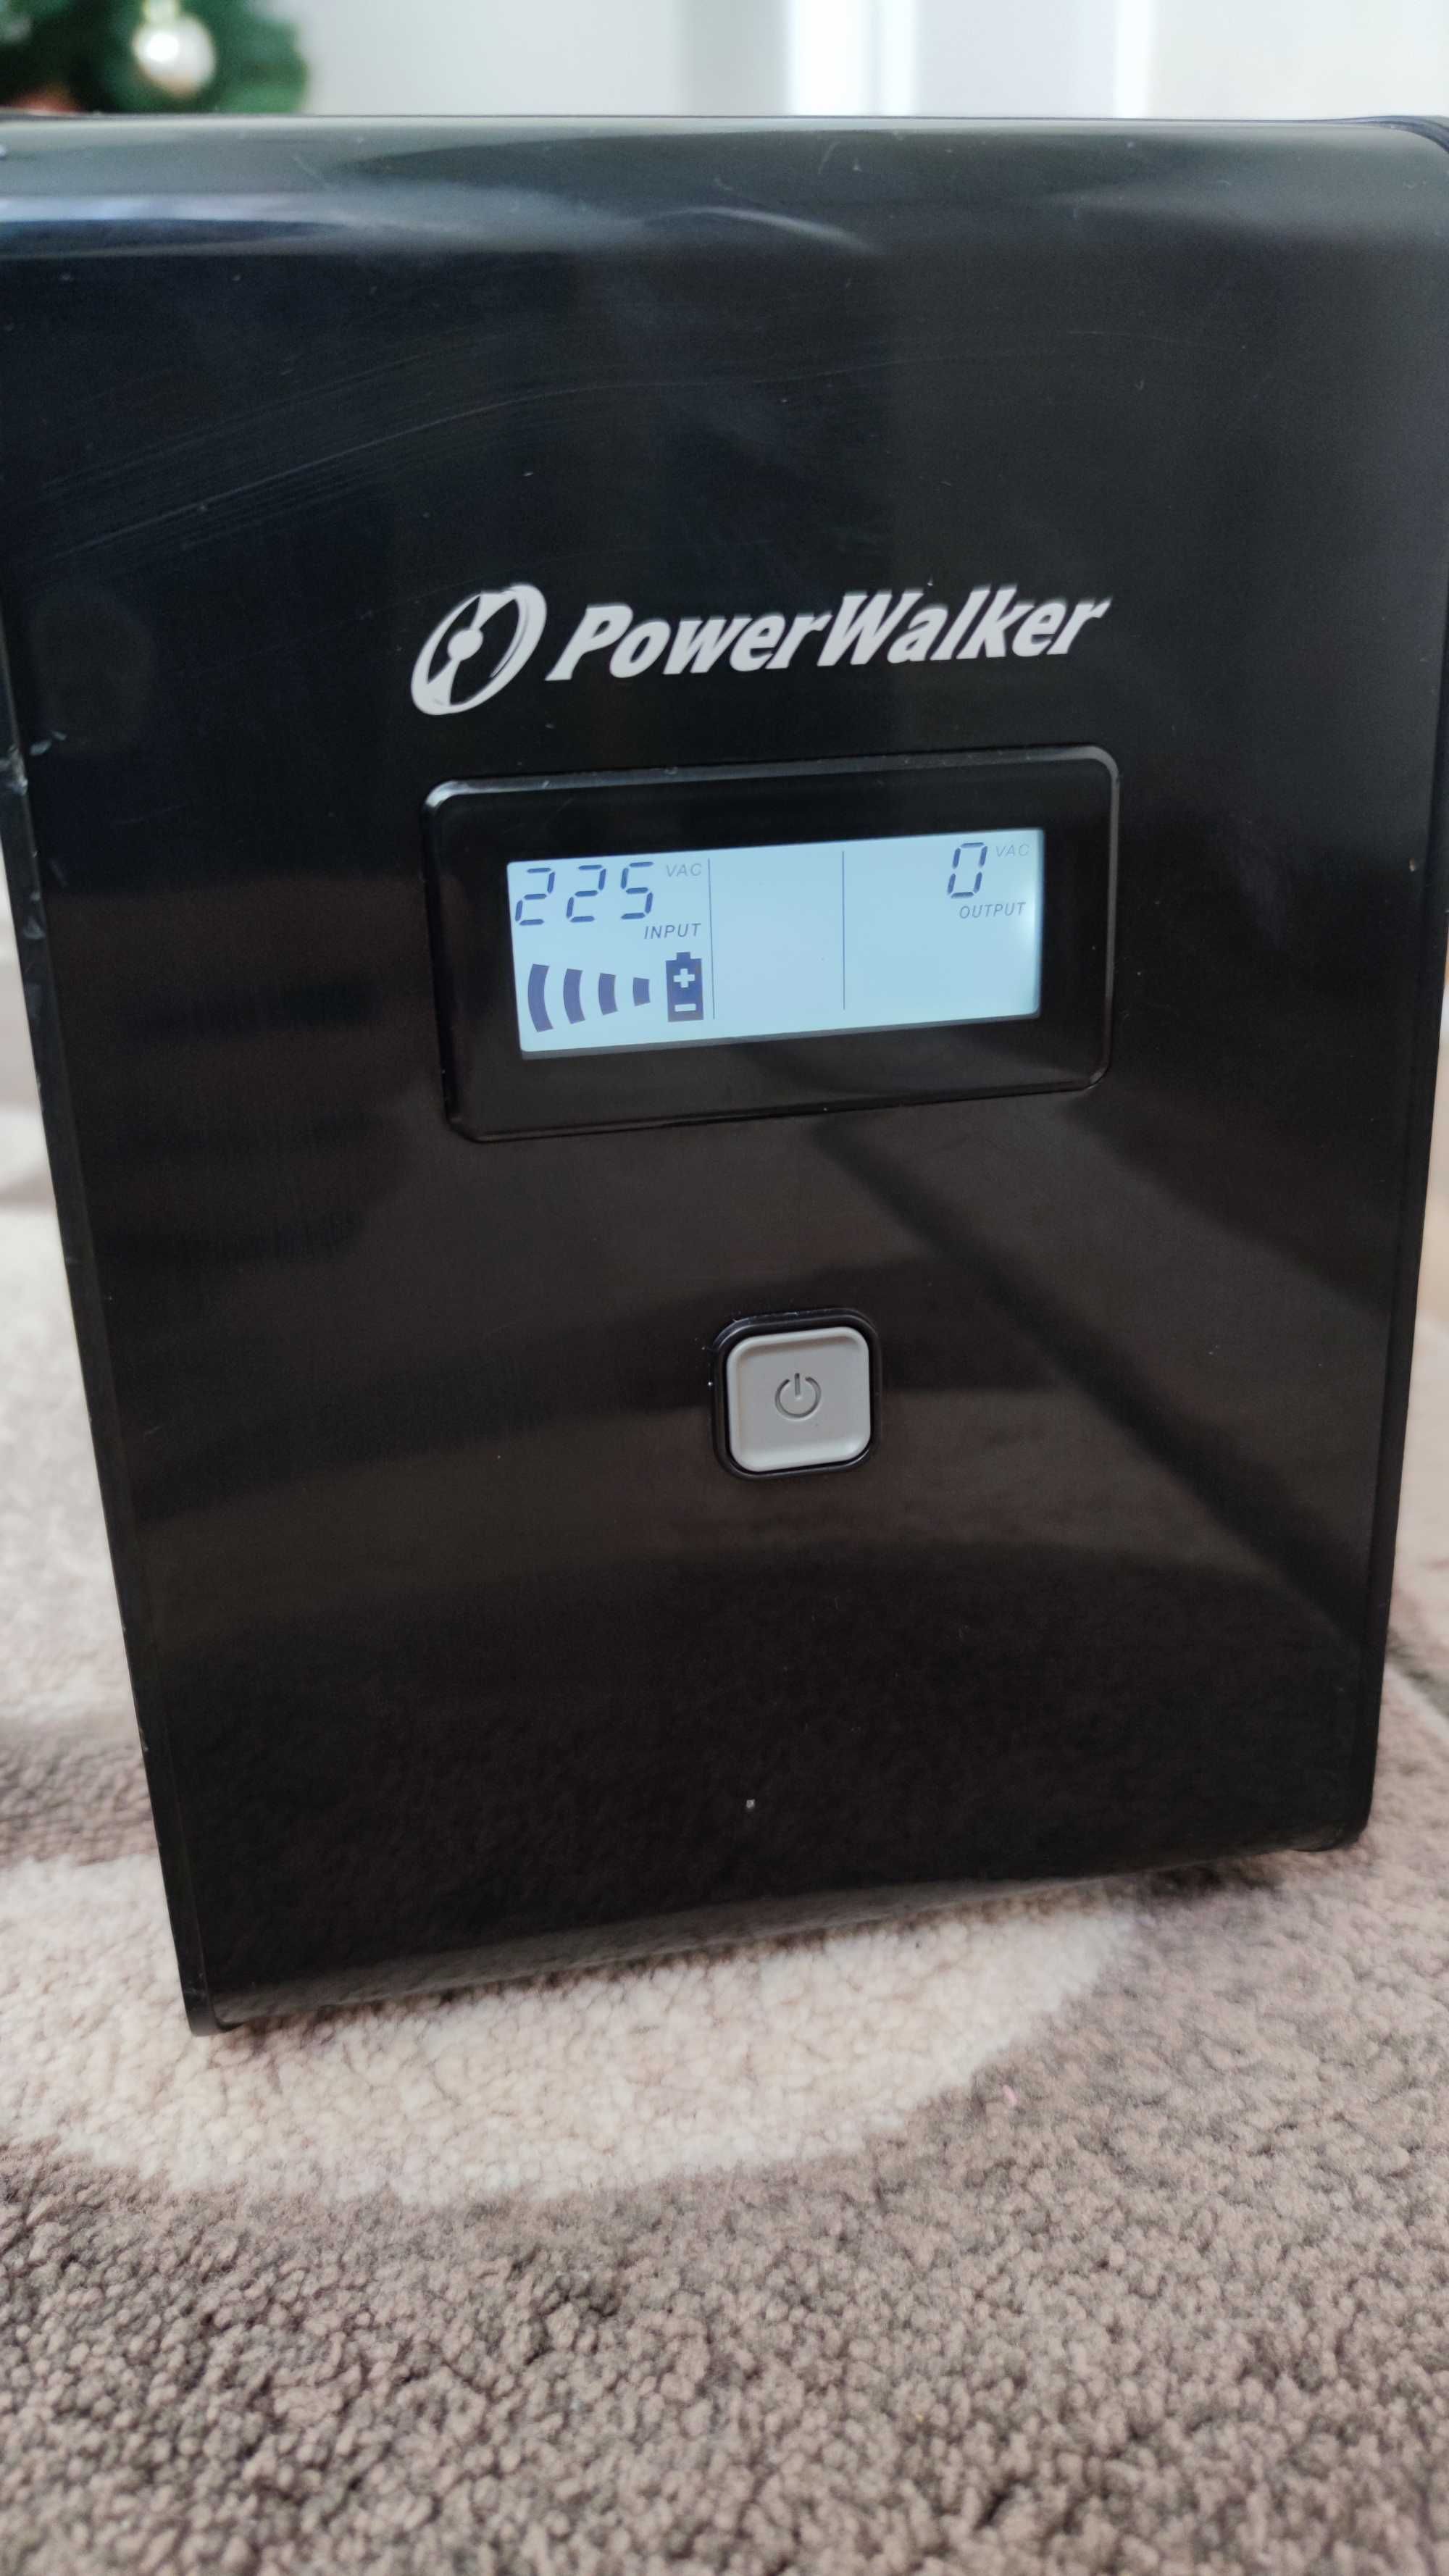 УПС Power walker VI 1500 LCD 900w